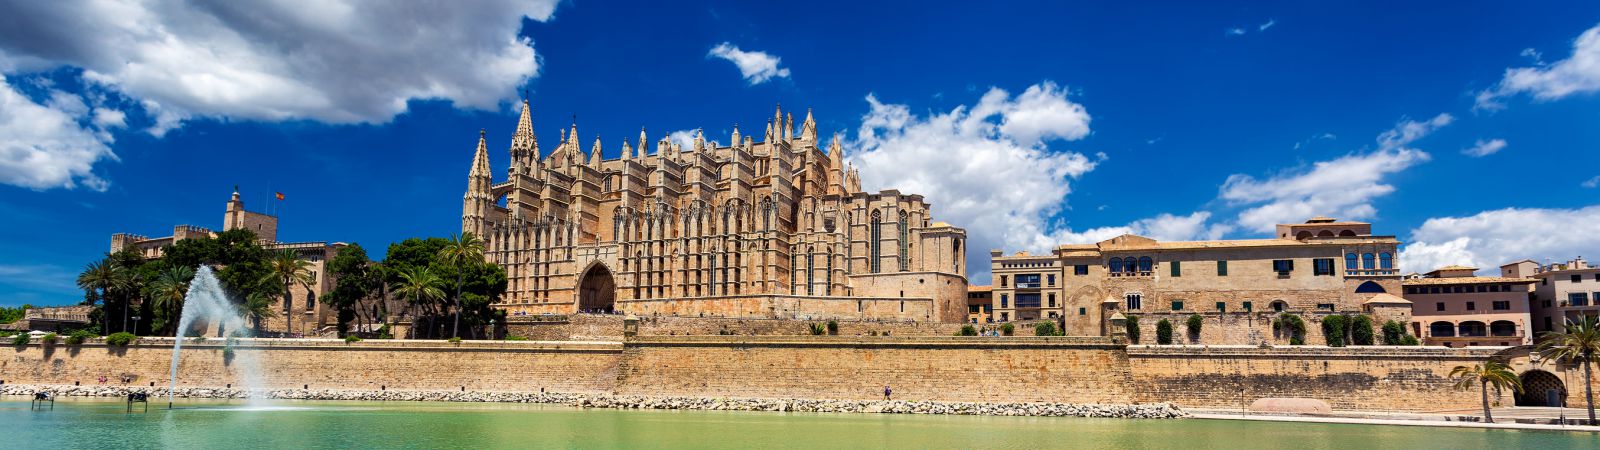 De prachtige kathedraal in Palma de Mallorca